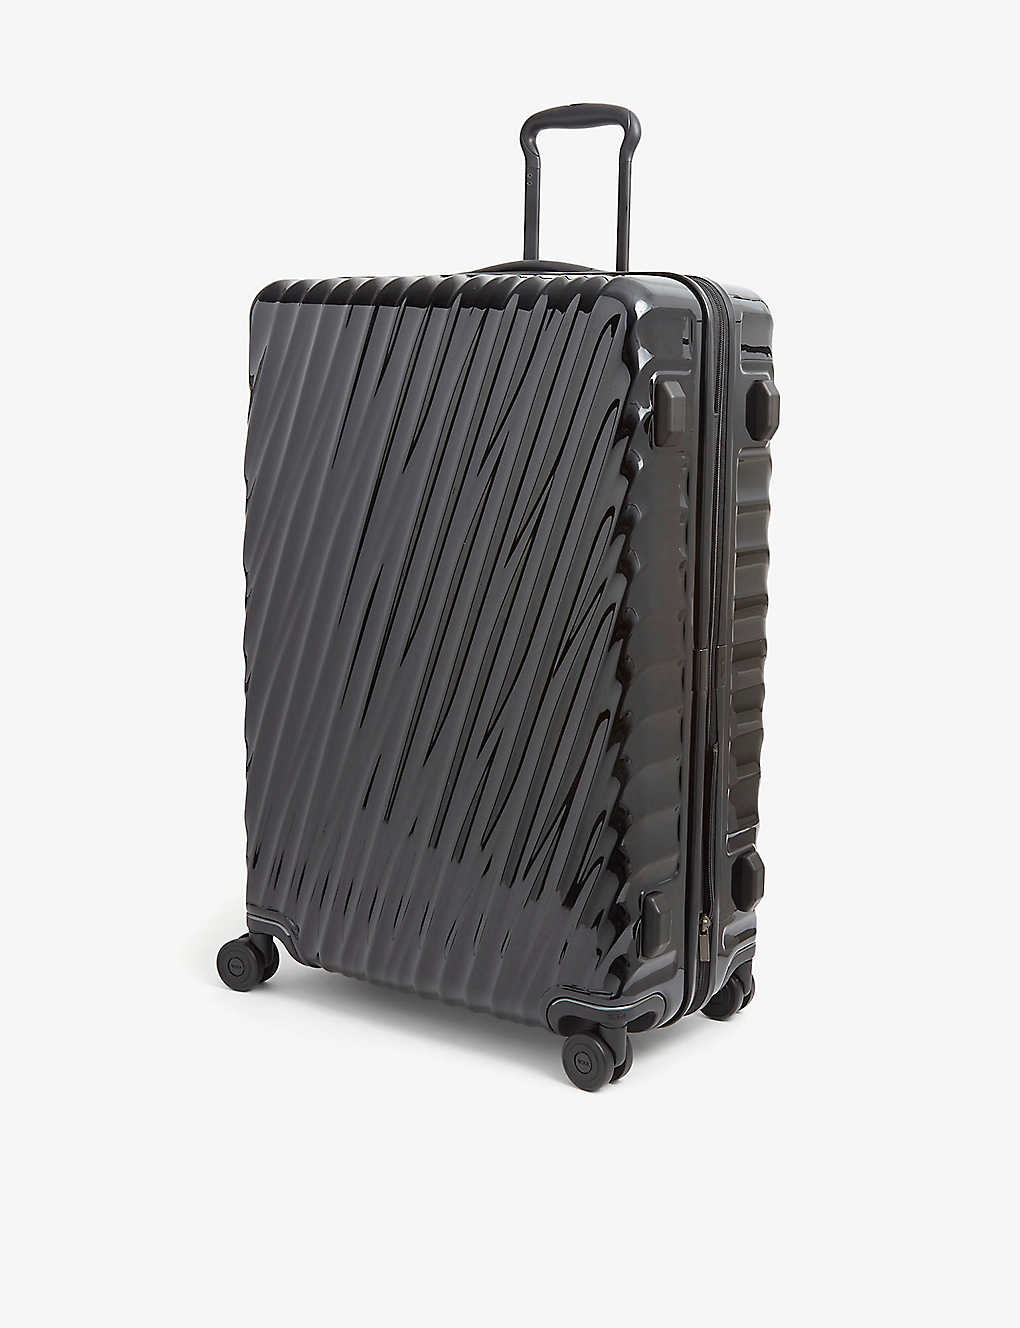 Tumi International Expandable 19 Degree Large Polycarbonate Suitcase In Black